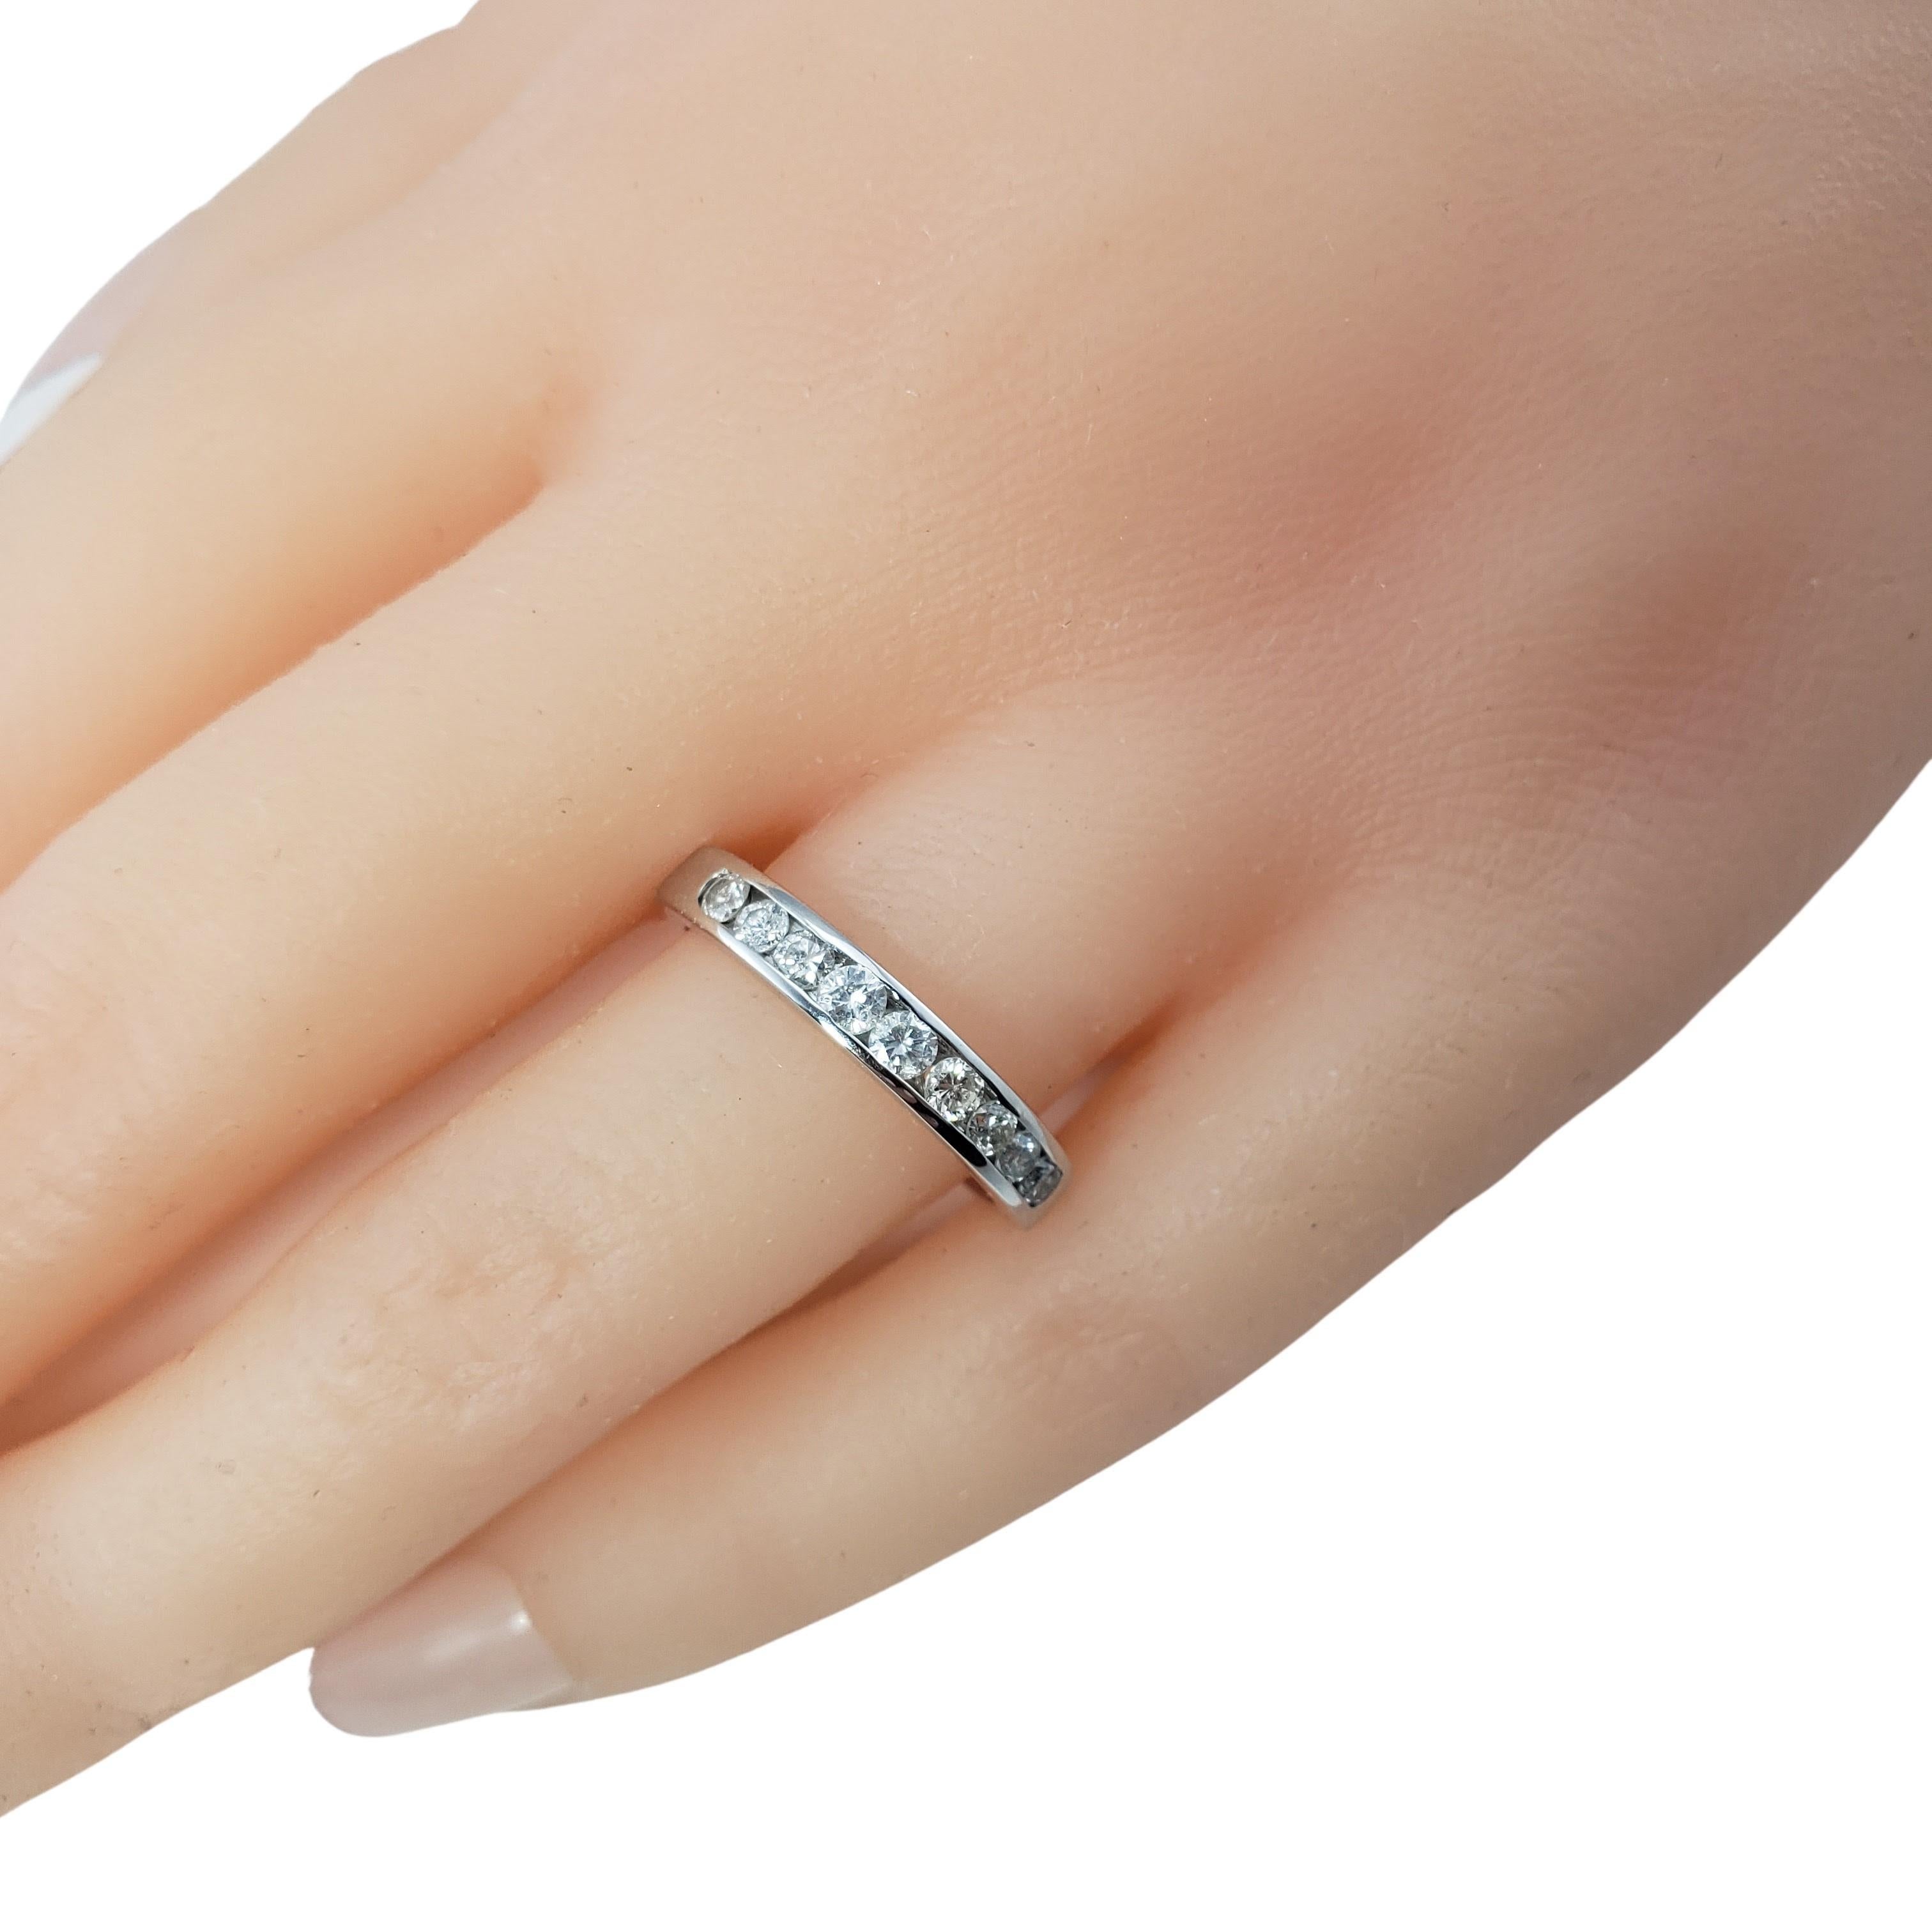  14 Karat White Gold Diamond Wedding Band Ring Size 6.5 For Sale 2